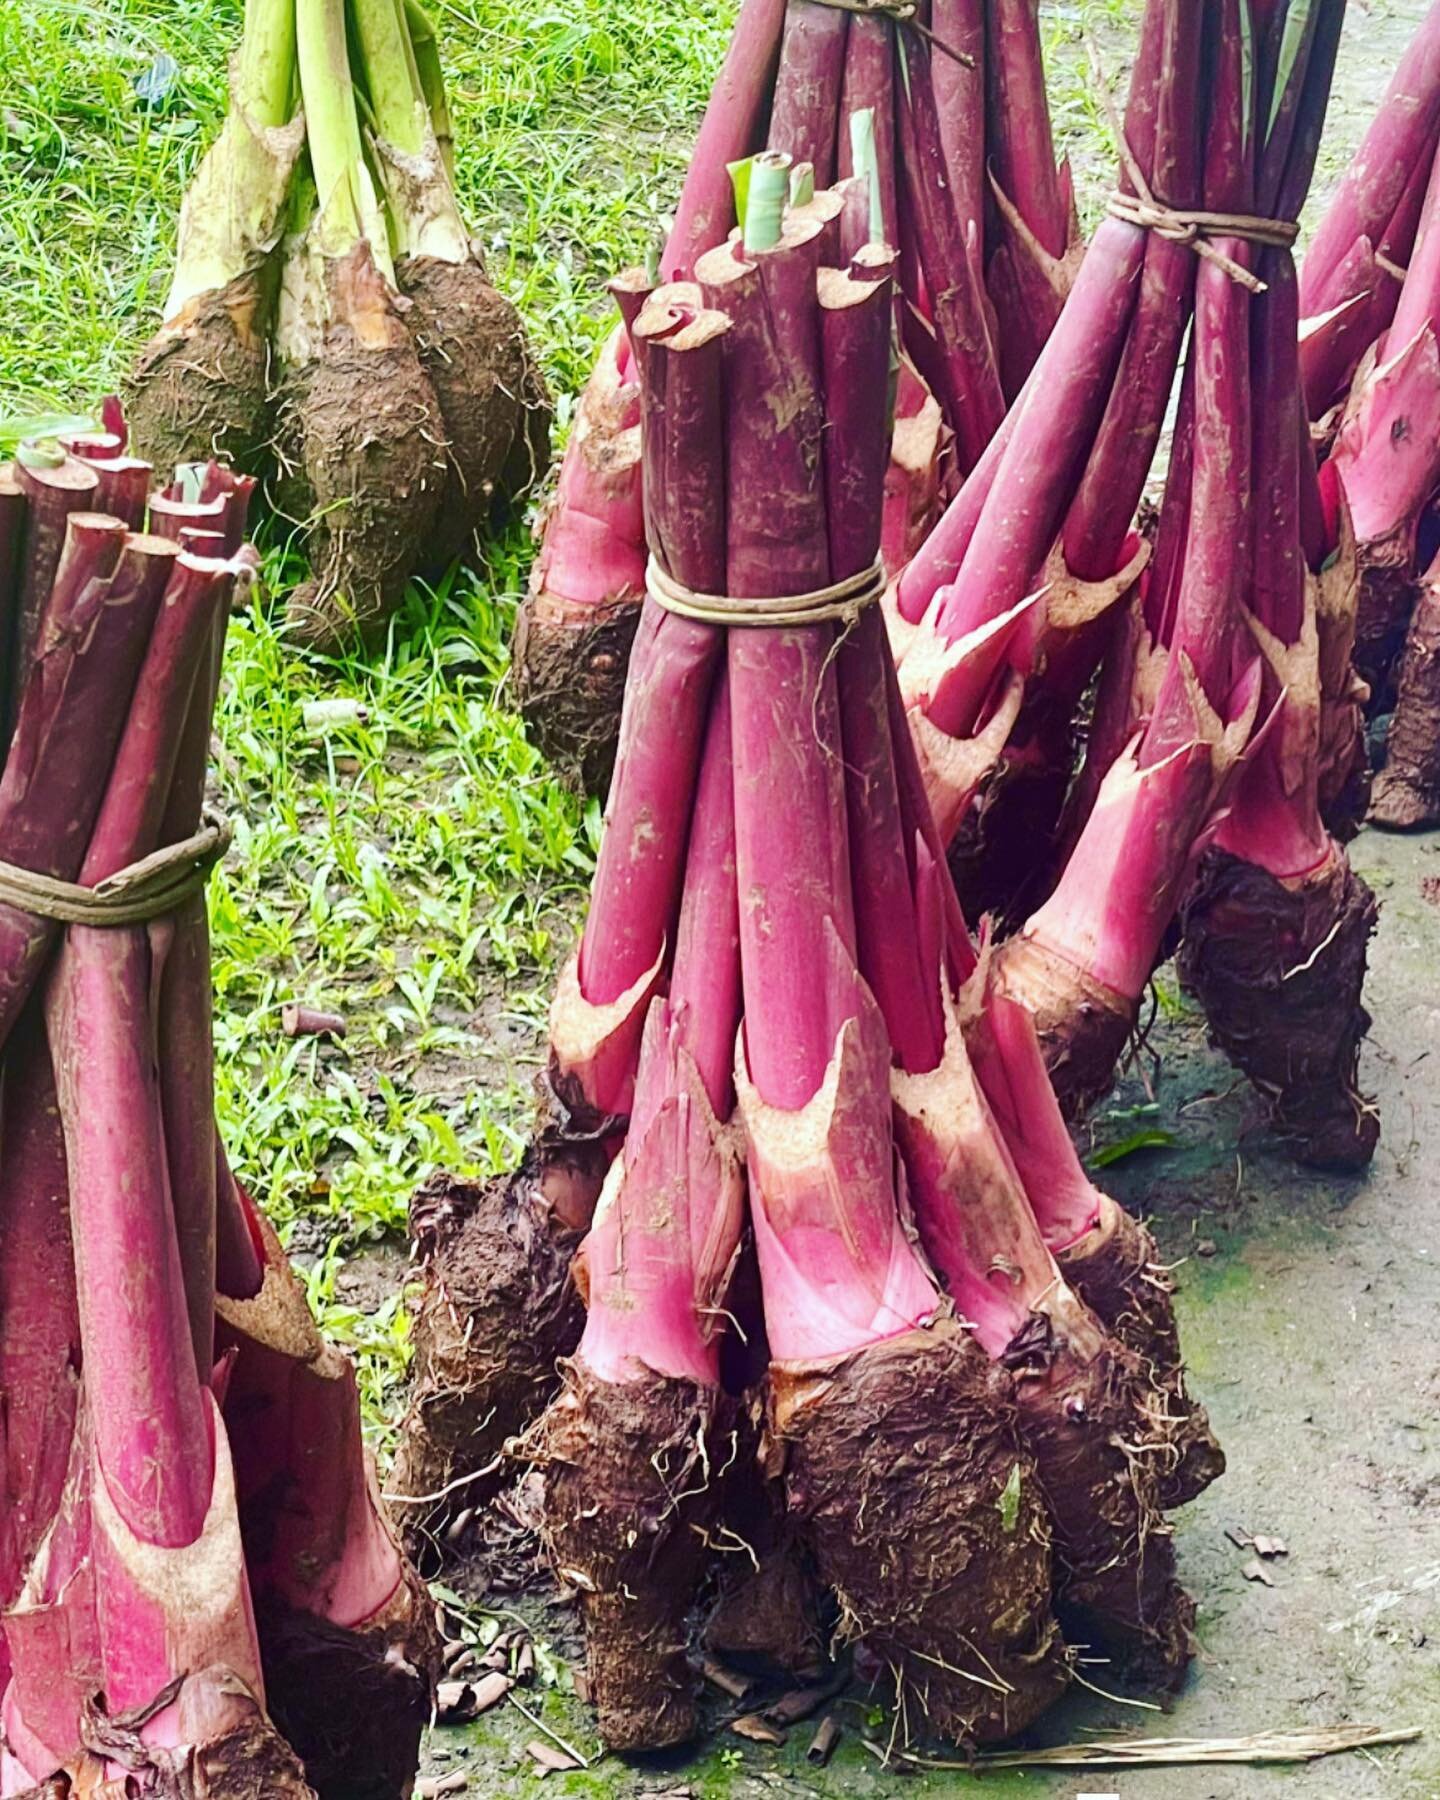 Taro. 

#farmersmarket #fiji #savusavu #produce #taro #taroroot #southpacific